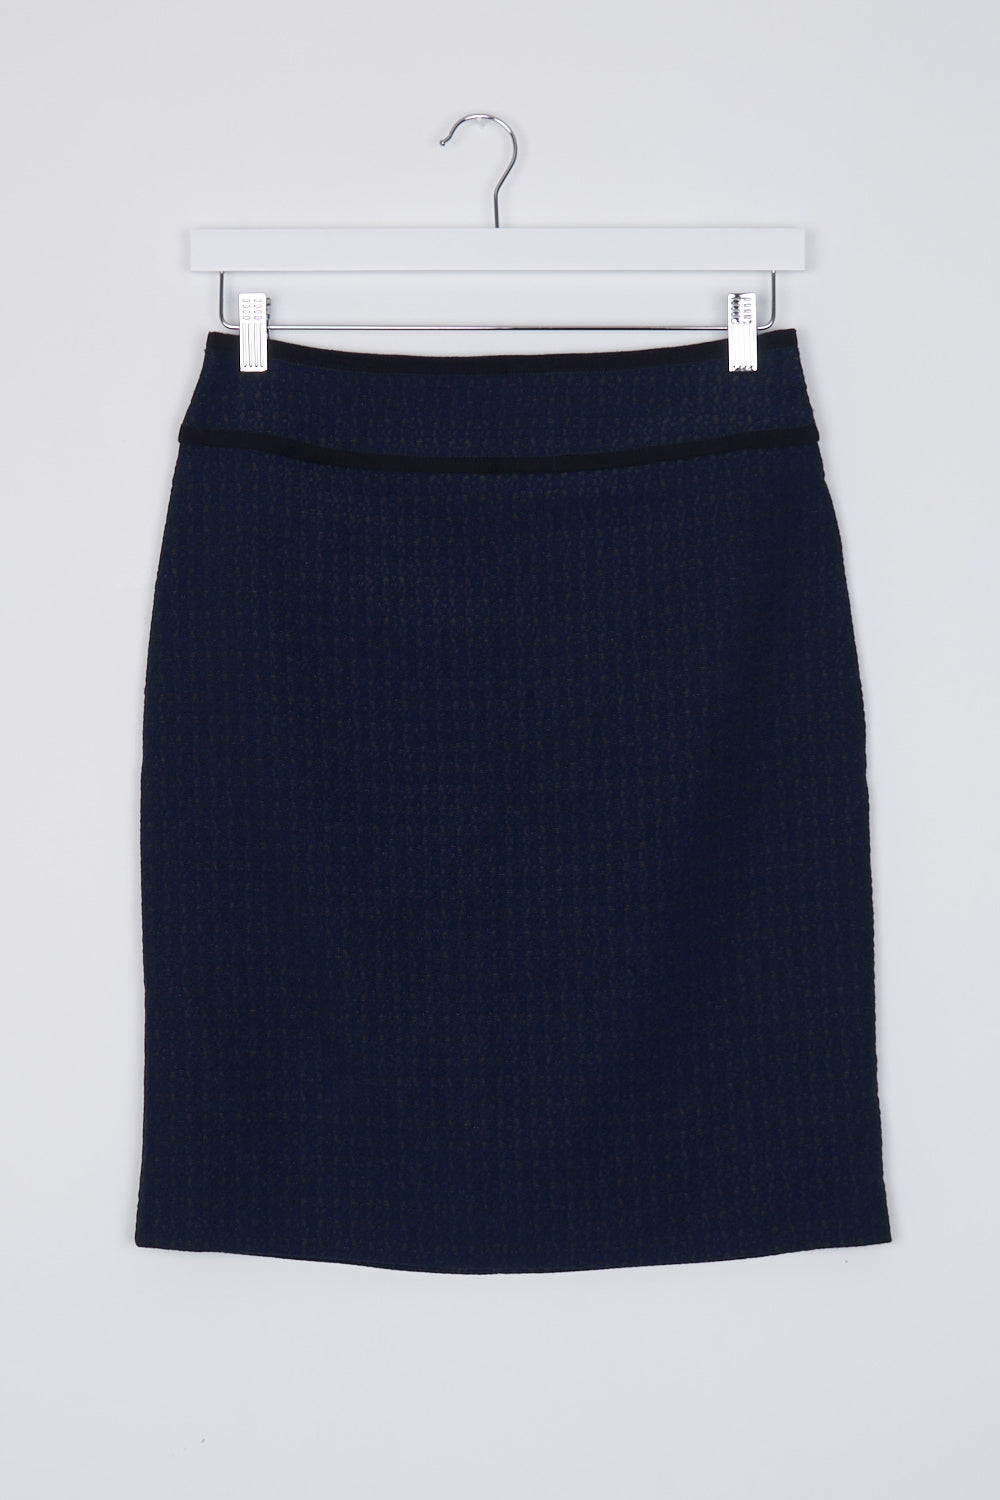 Anna Thomas Navy Patterned Skirt